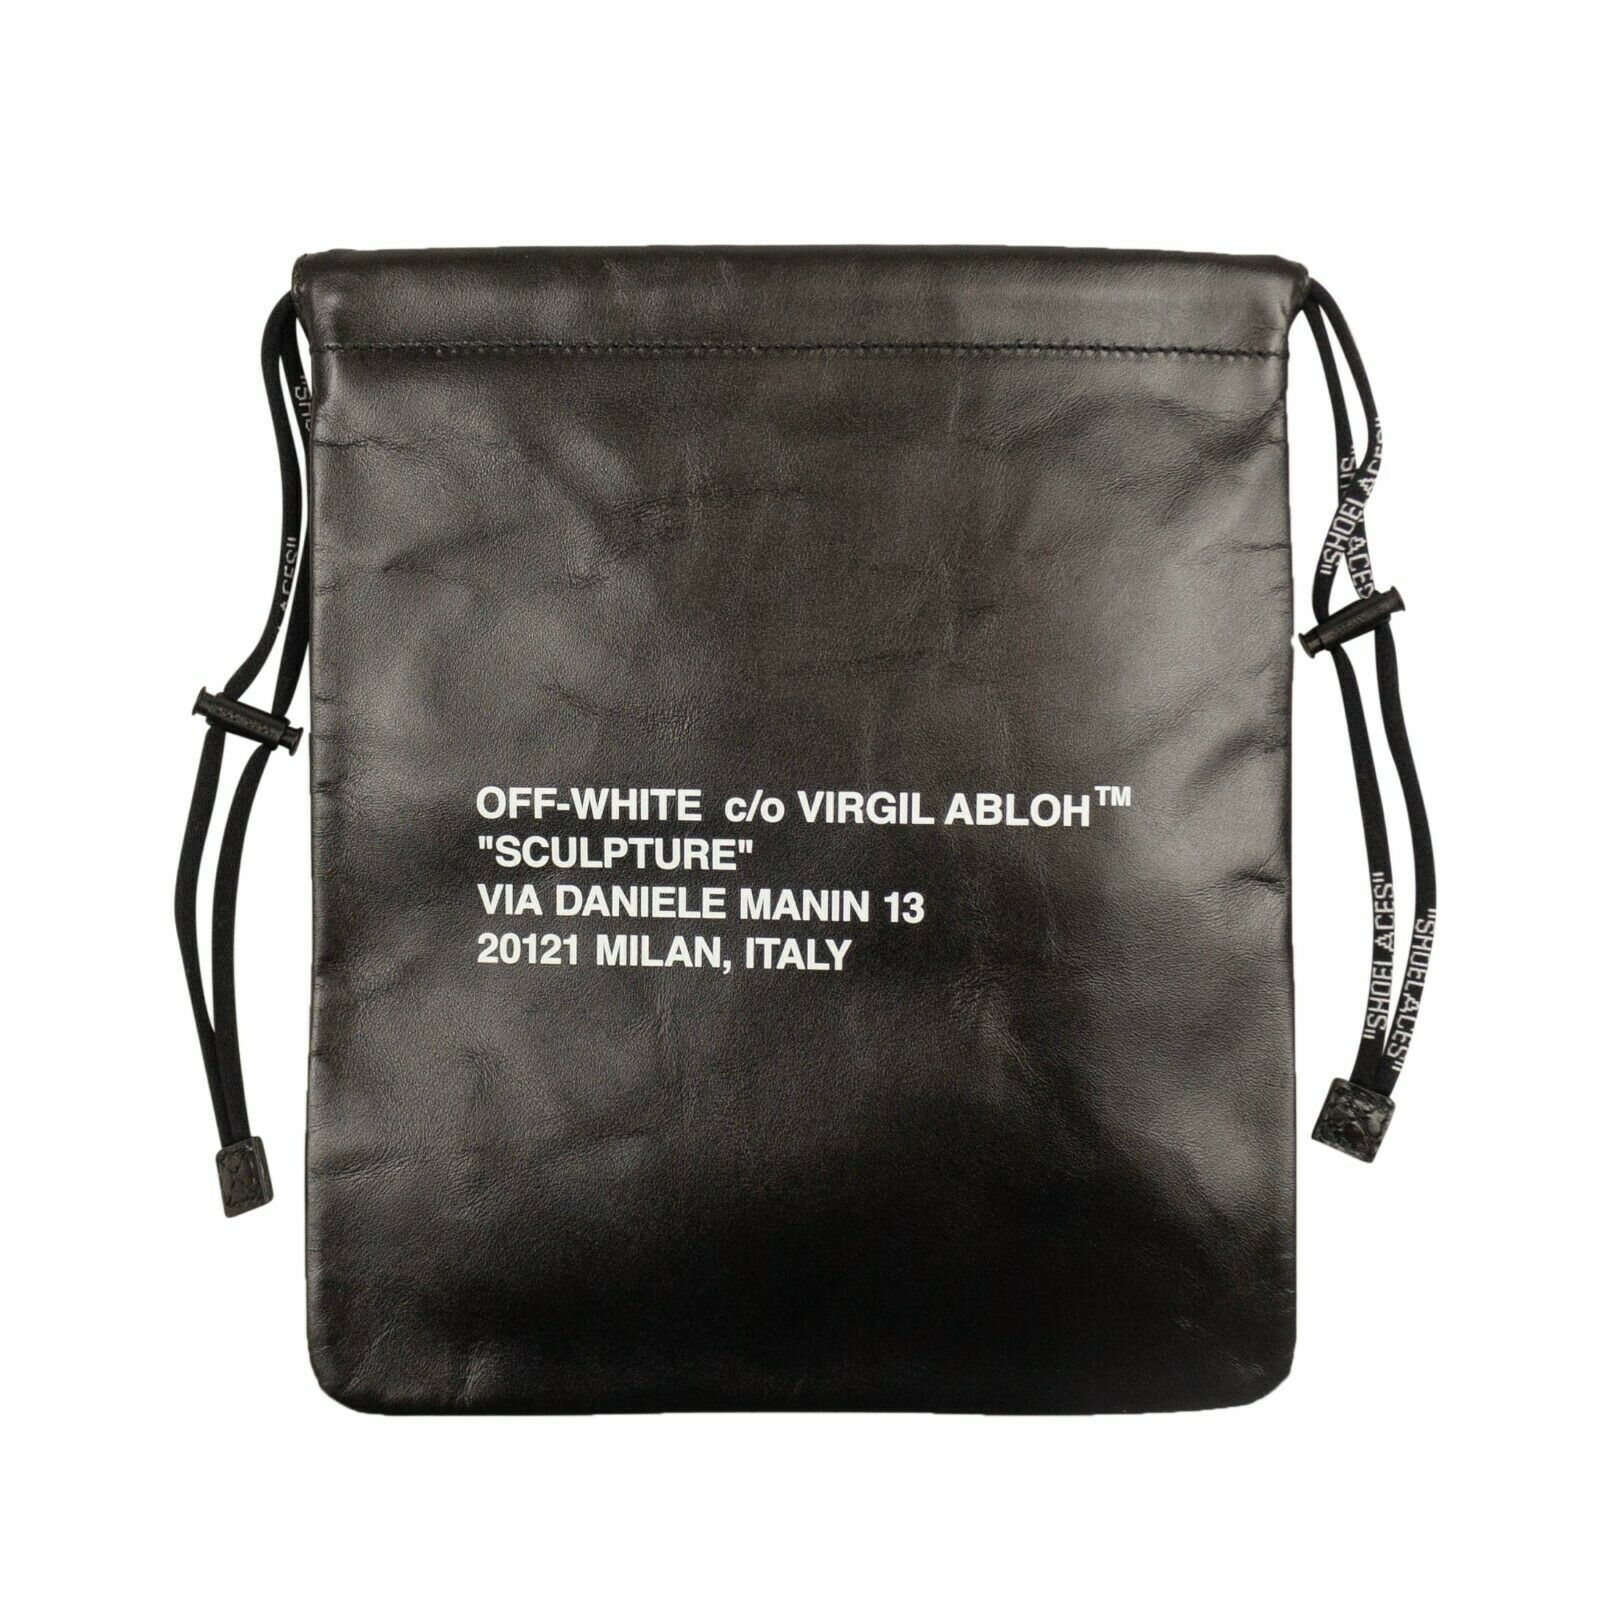 Off-White c/o Virgil Abloh Logo Crossbody Bag in Black